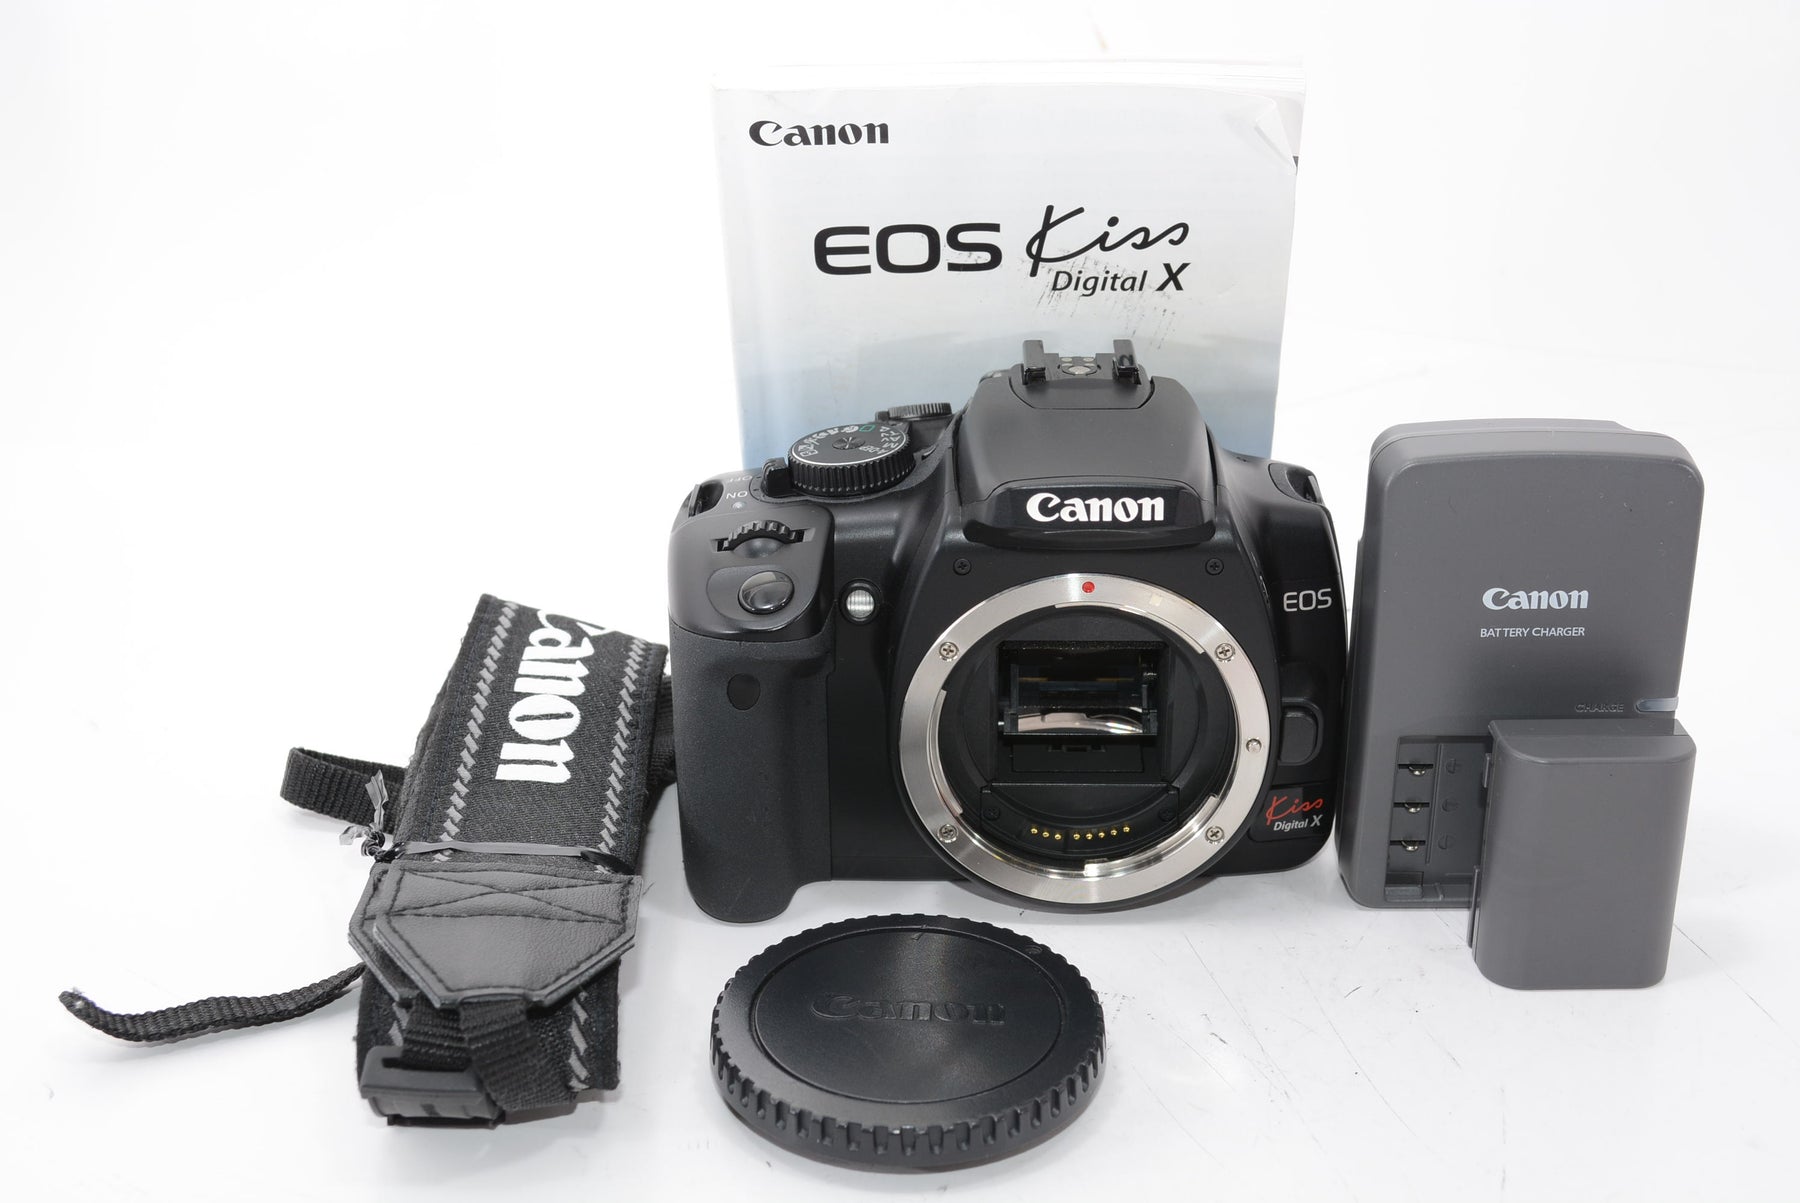 Canon デジタル一眼レフカメラ EOS Kiss X5 ボディ KISSX5-BODY